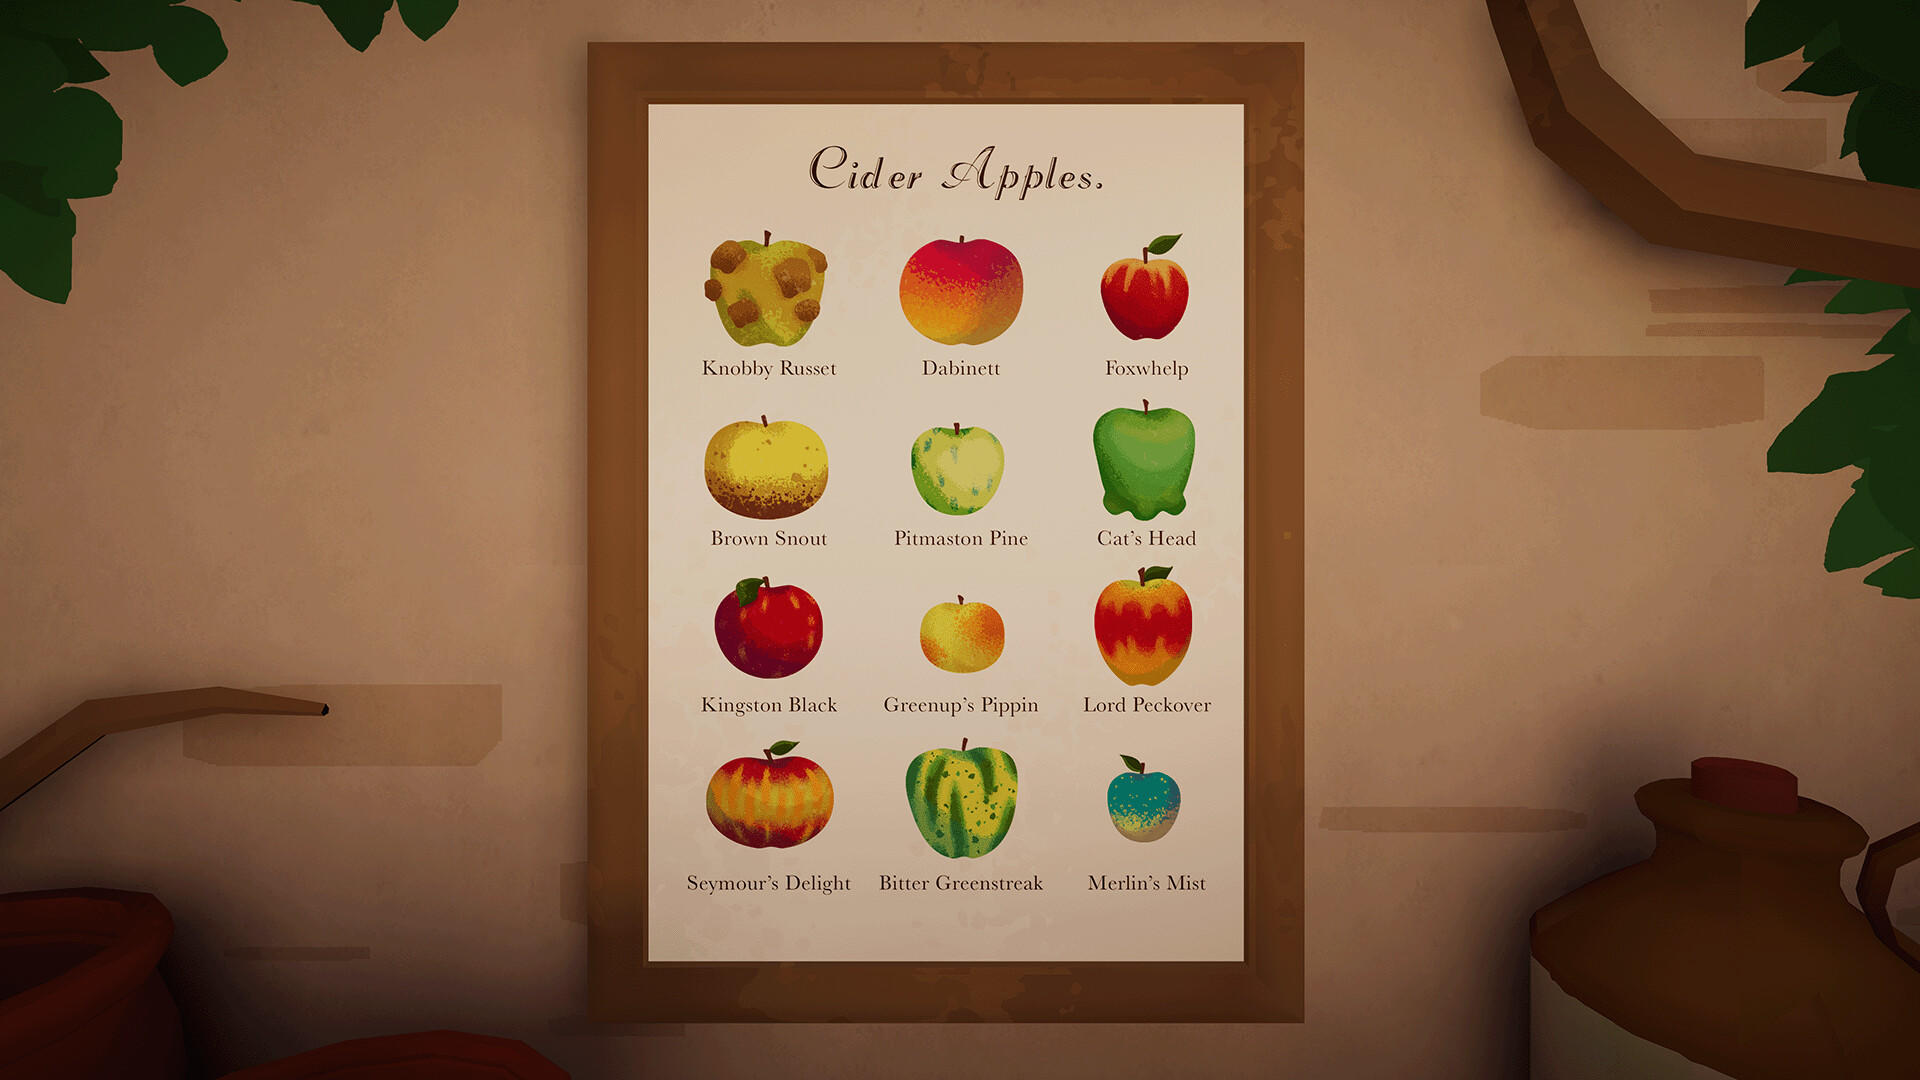 Botany Manor screenshot game